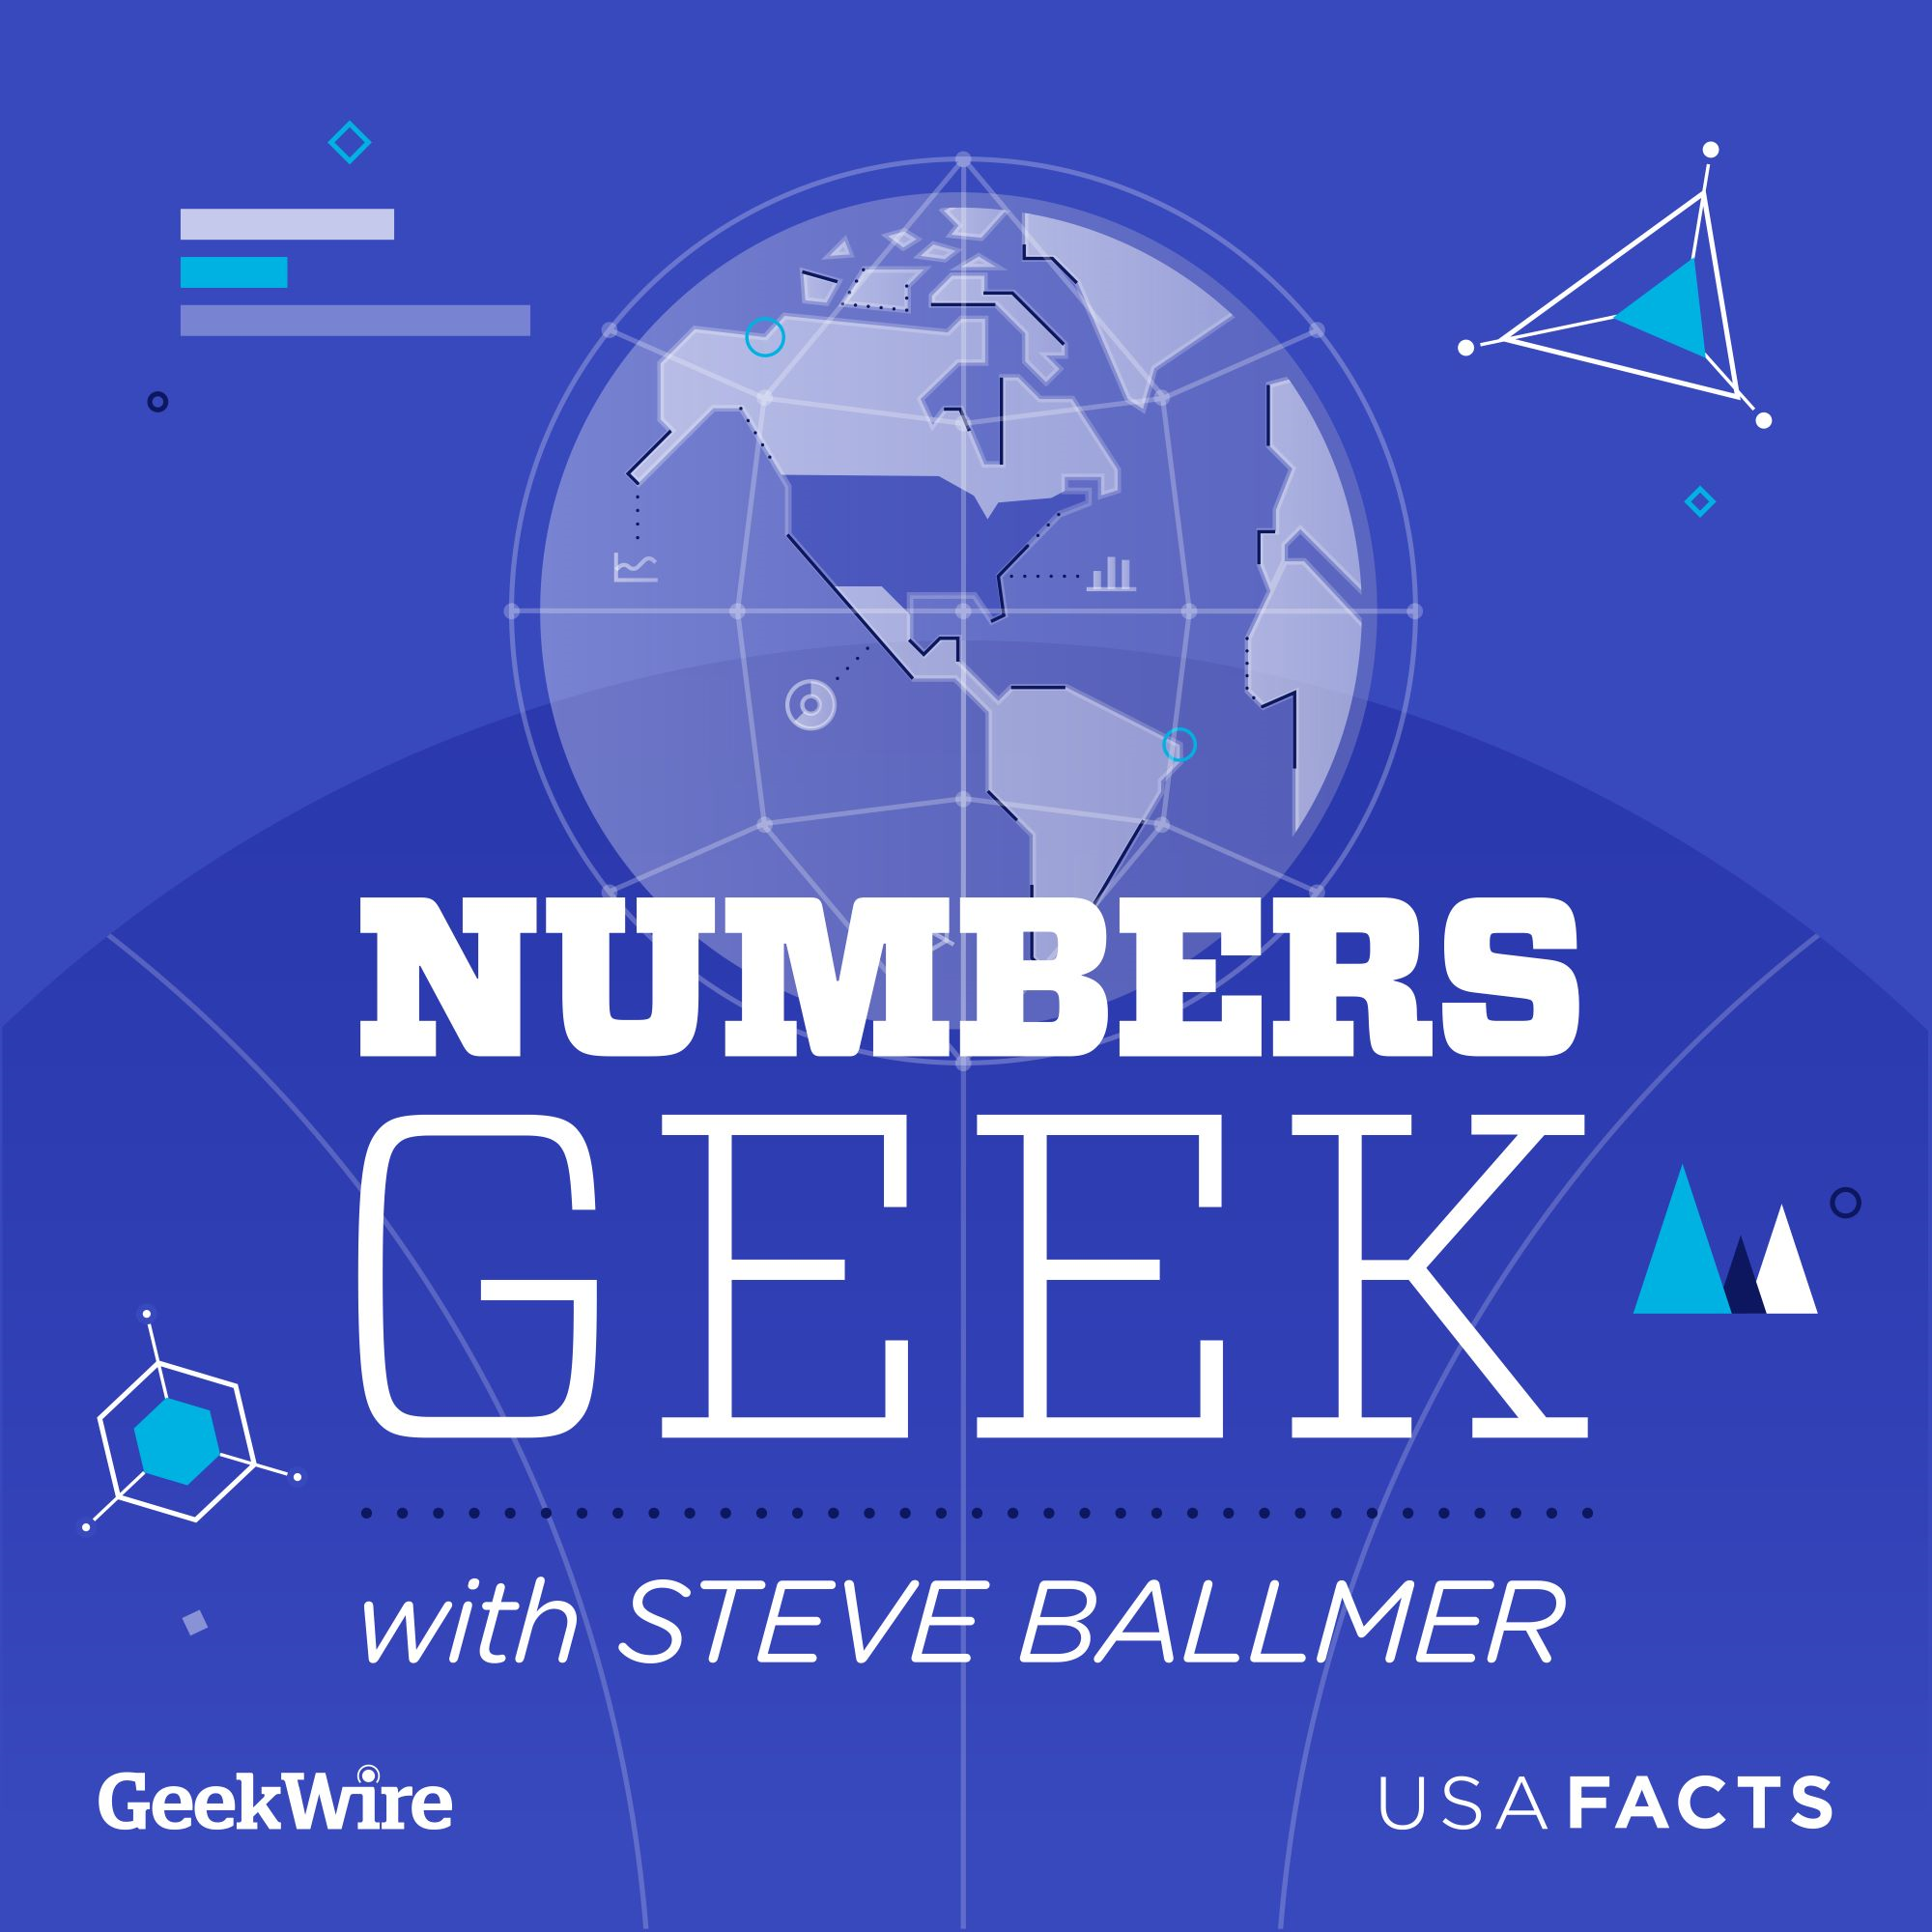 Bonus: Steve Ballmer analyzes his team's historic NBA win